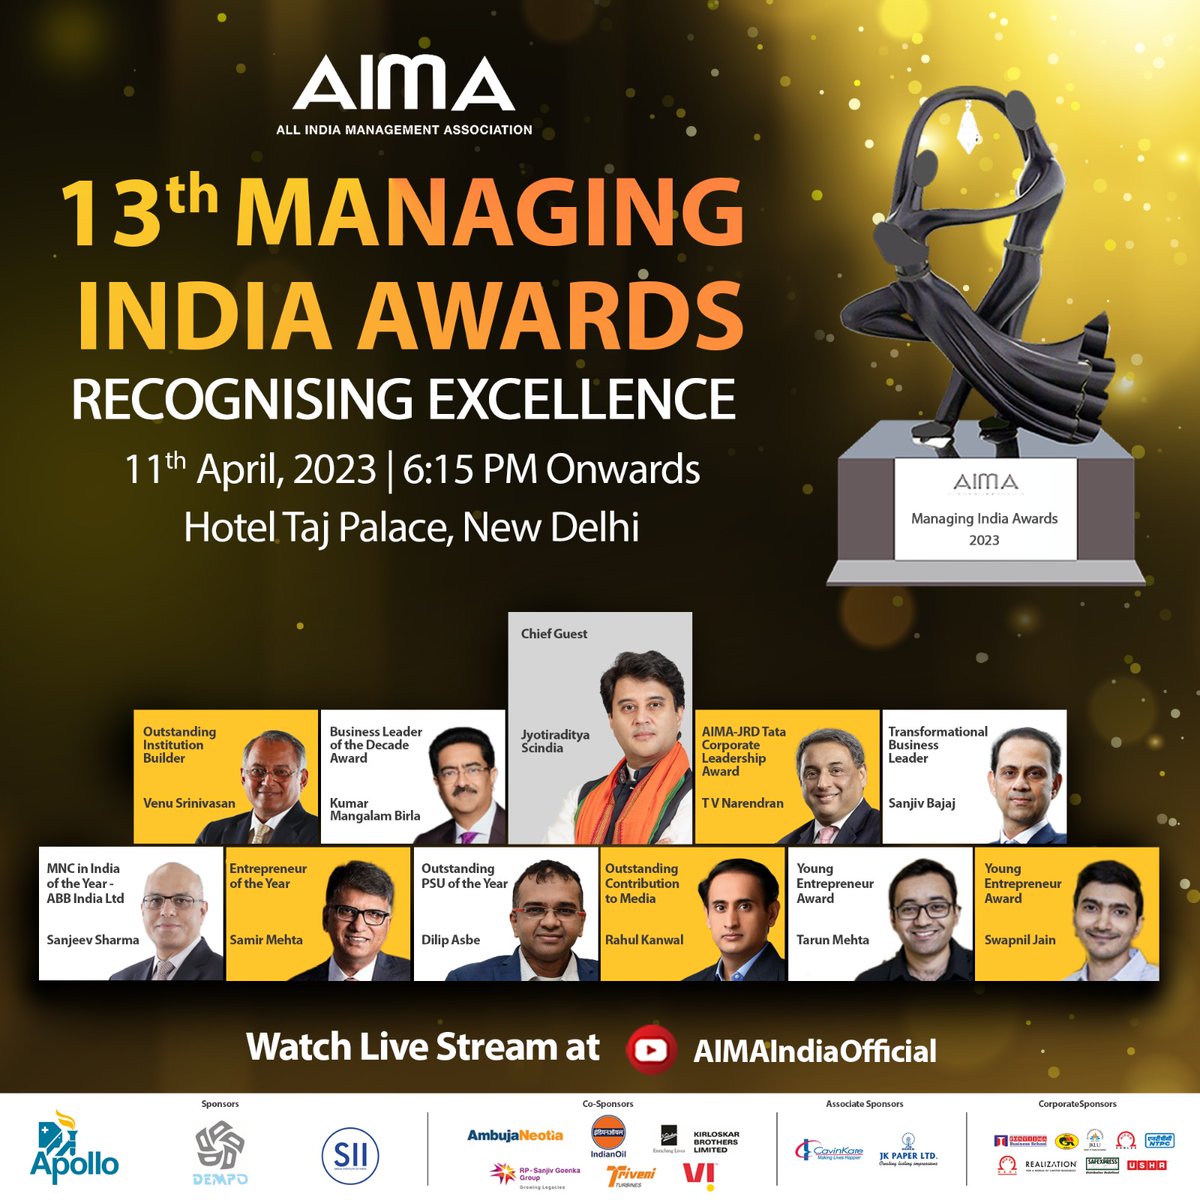 Join us in applauding the winners of the 13th Managing India Awards on 11th April at Hotel Taj Palace, New Delhi.
Chief Guest- @JM_Scindia
Awardees- @sanjivrbajaj; #TVNarendran; @rahulkanwal #KumarMangalamBirla; @ntpclimited & more.

#ManagingIndiaAwards #MIA2023